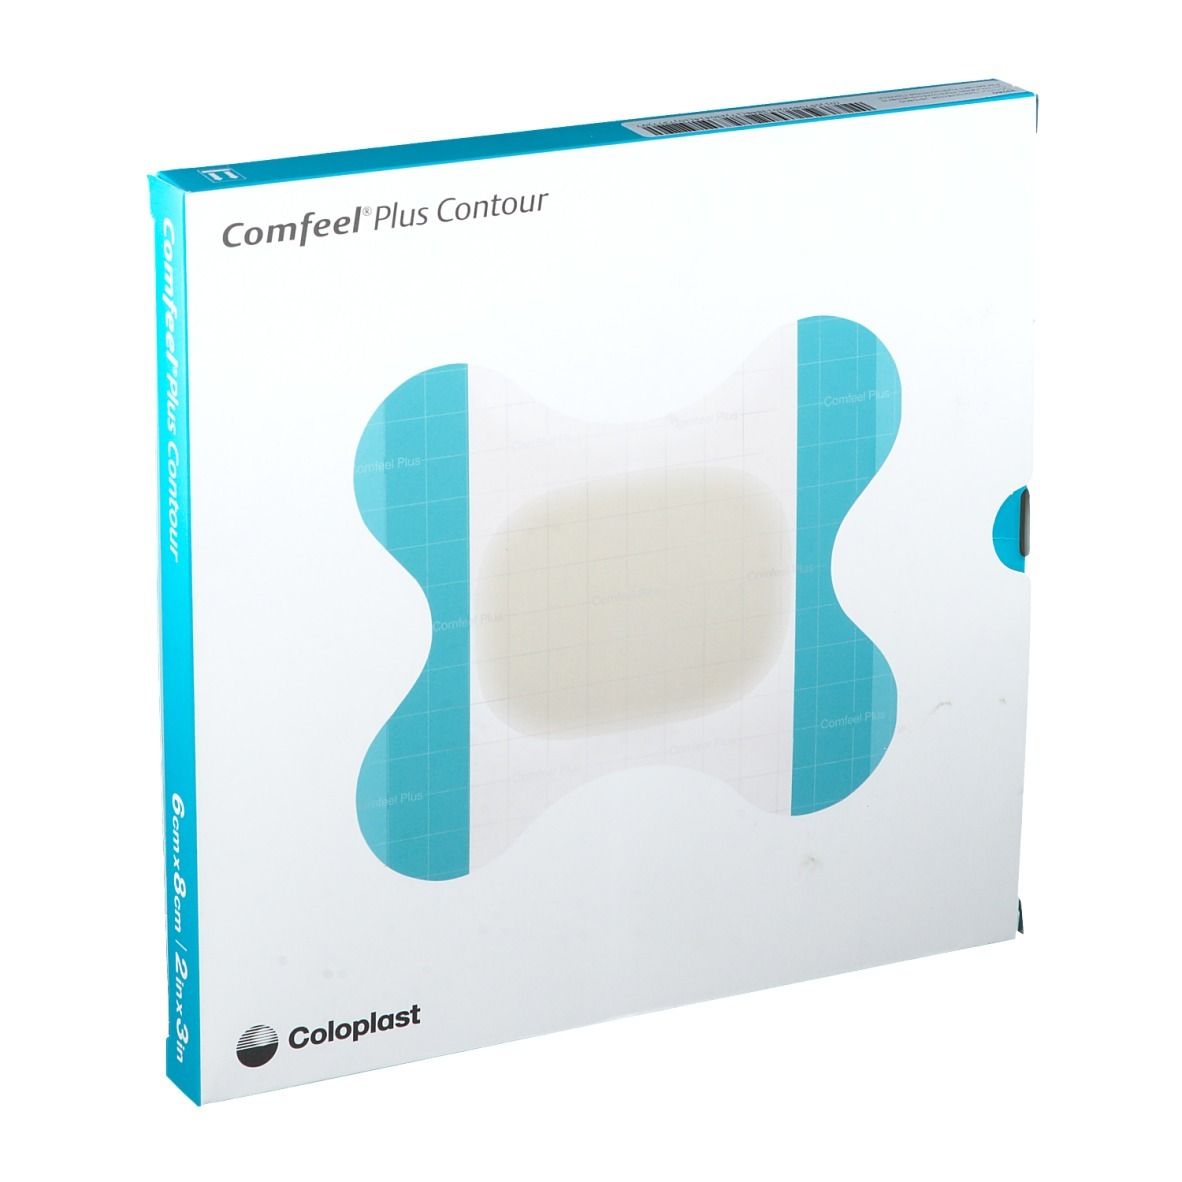 Coloplast Comfeel® Plus Contour 6 cm x 8 cm